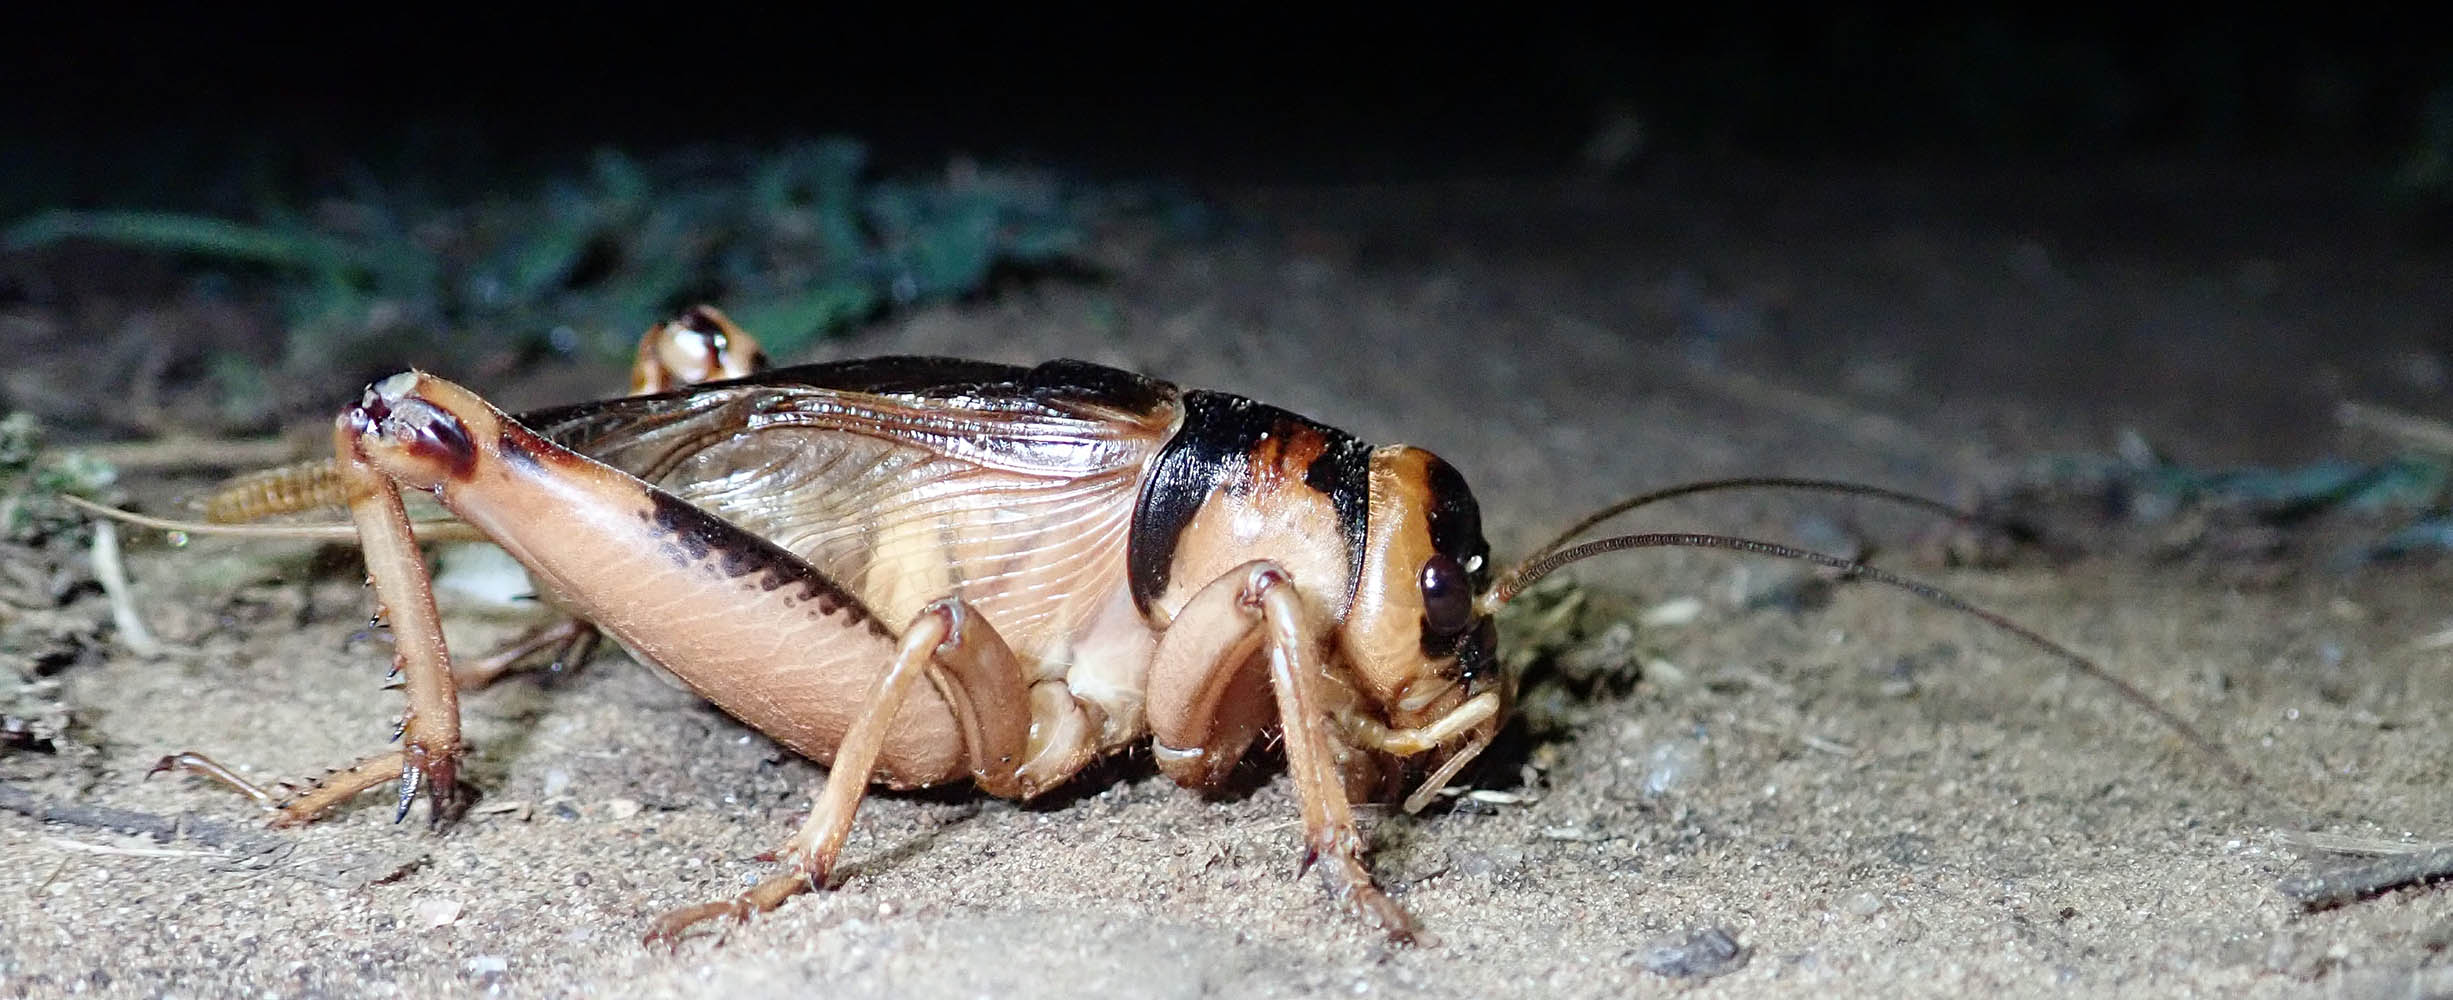 cricket-giant-burrowing-Brachytrupes-membranaceus-queen-elizabeth-uganda